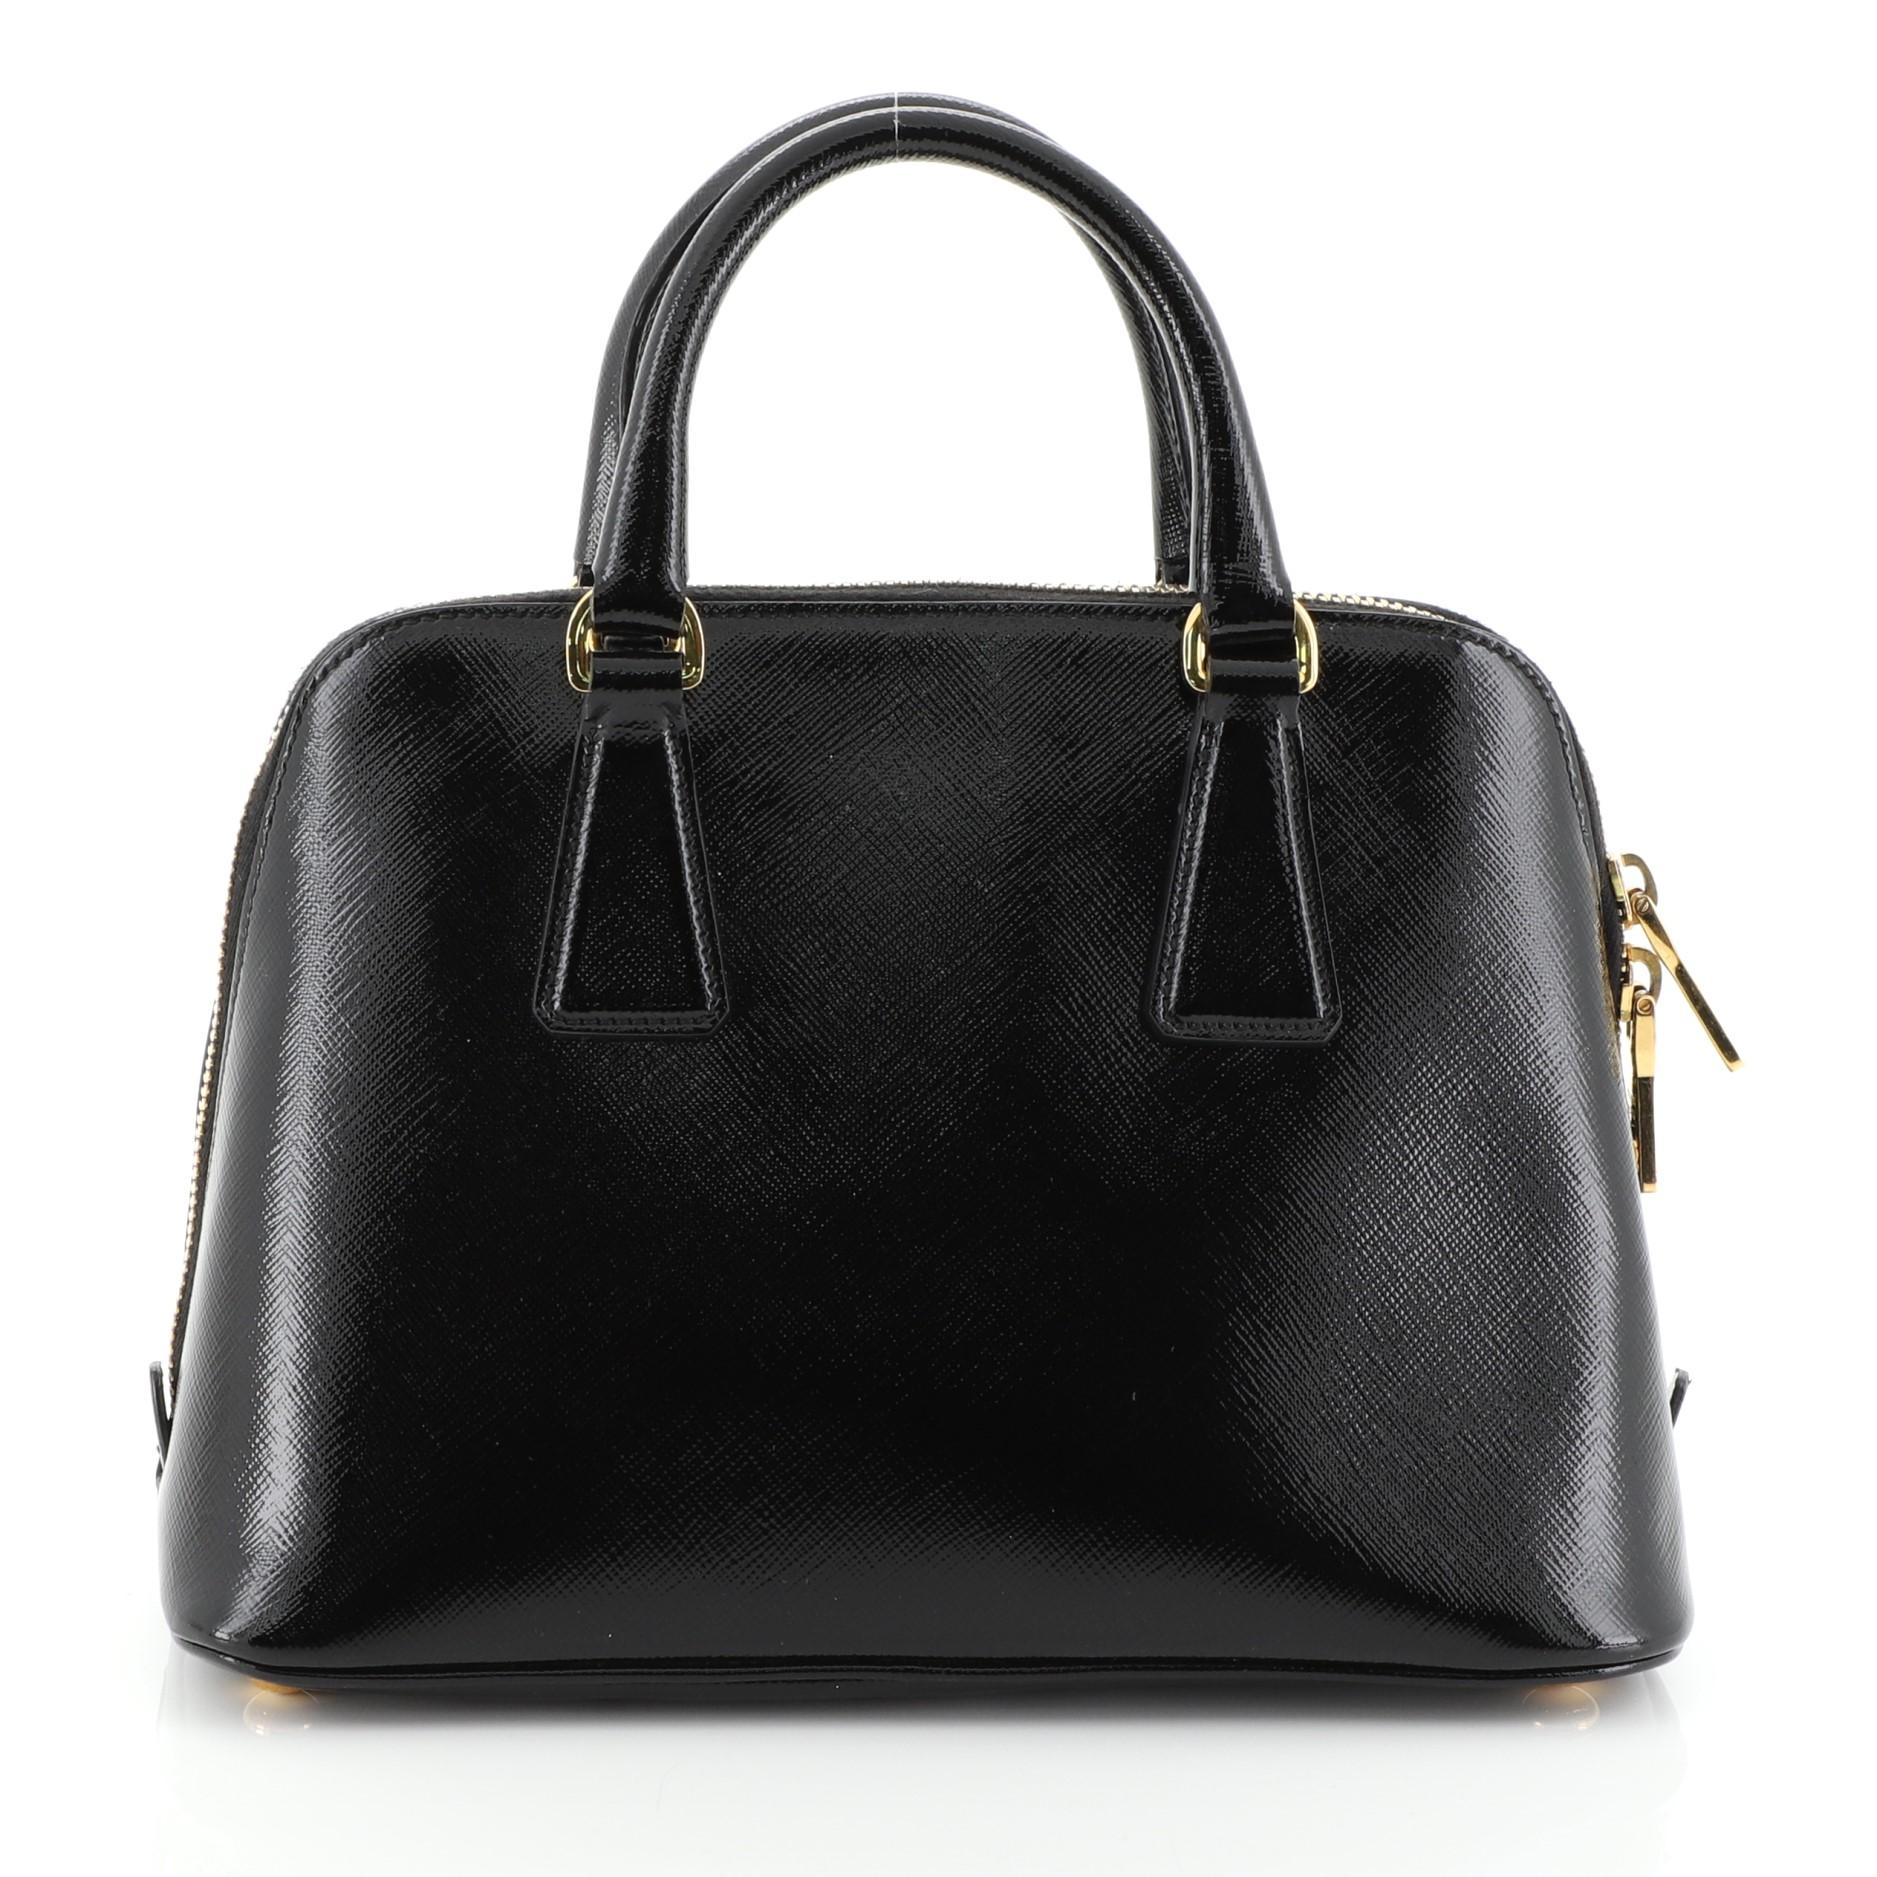 Black Prada Promenade Bag Vernice Saffiano Leather Small